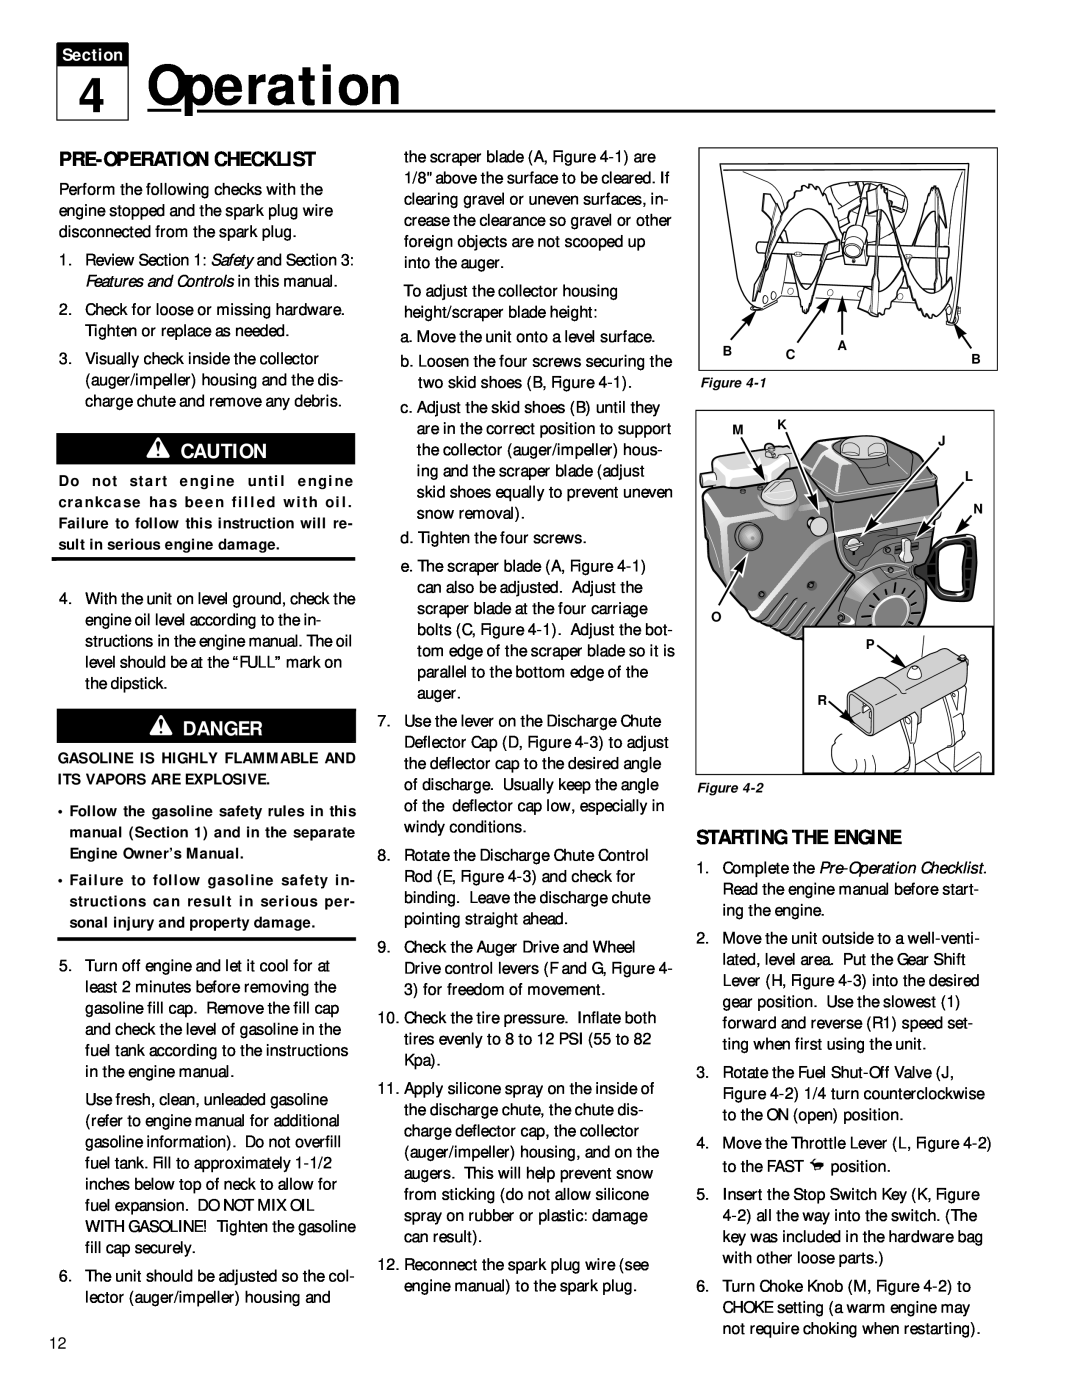 Troy-Bilt 42052, 42051 owner manual Pre-Operation Checklist, Starting The Engine, Danger, Section 